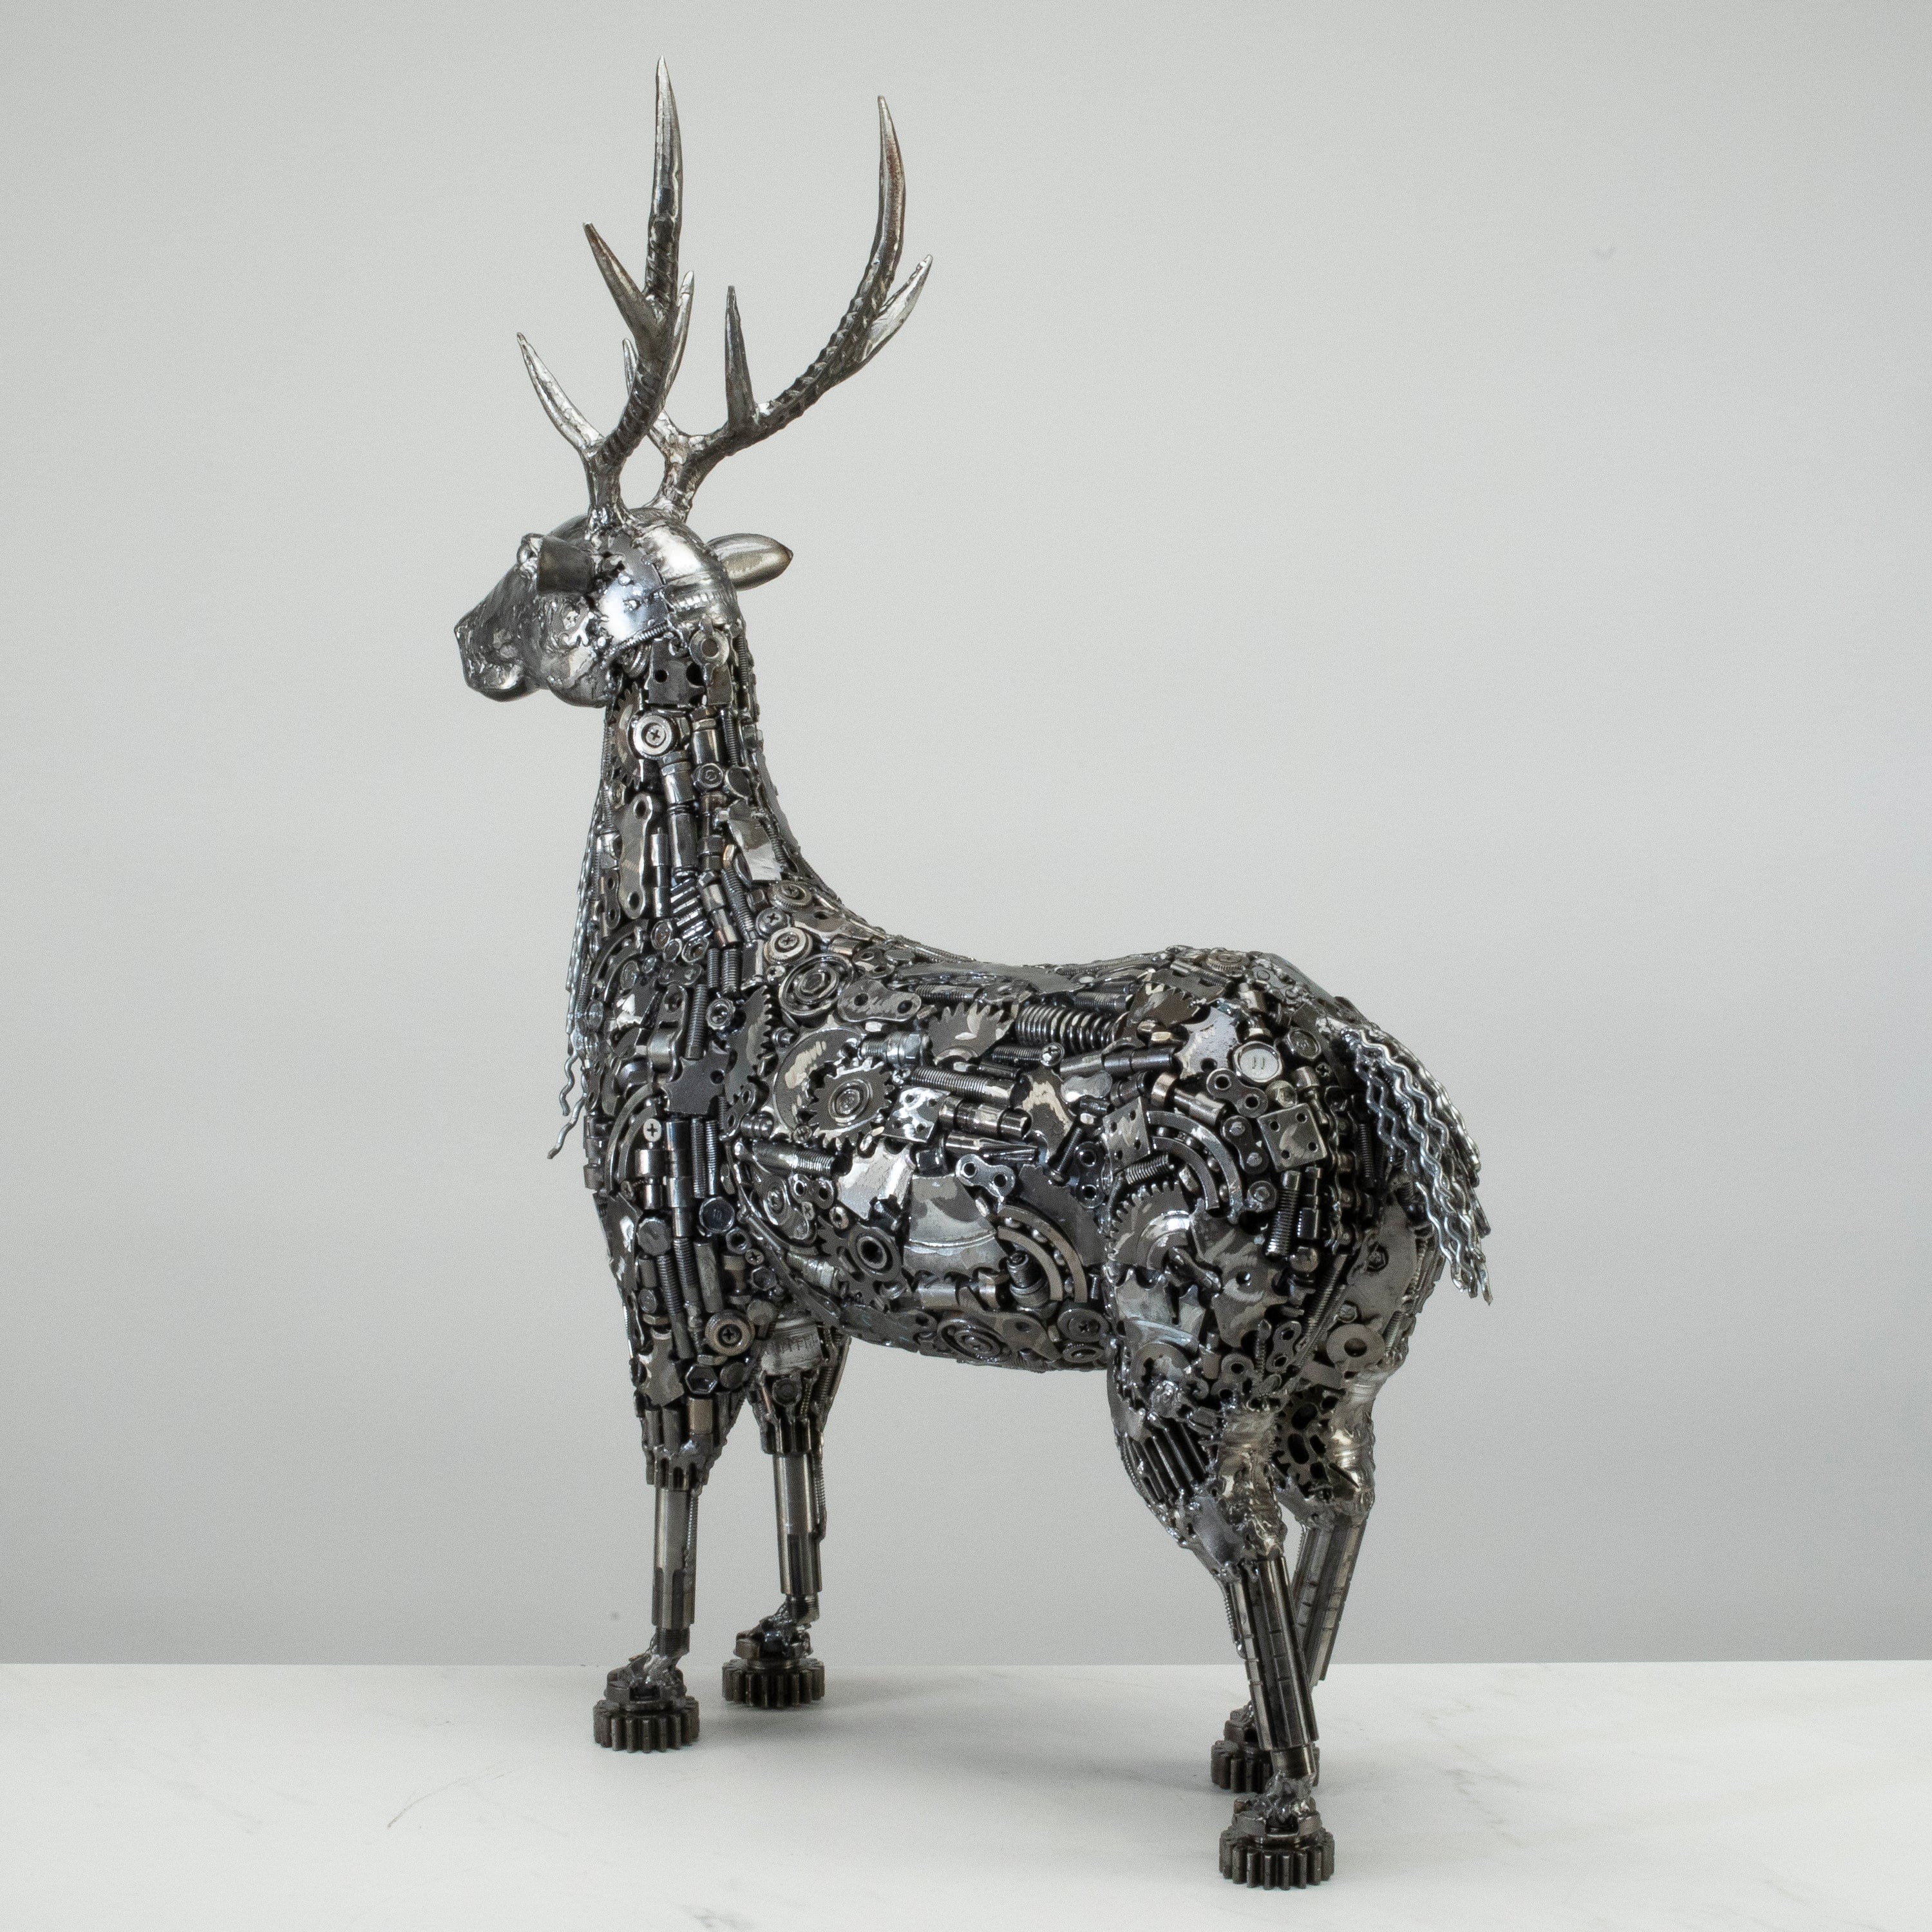 KALIFANO Recycled Metal Art 26" Reindeer Recycled Metal Art Sculpture RMS-RD52X67-PK